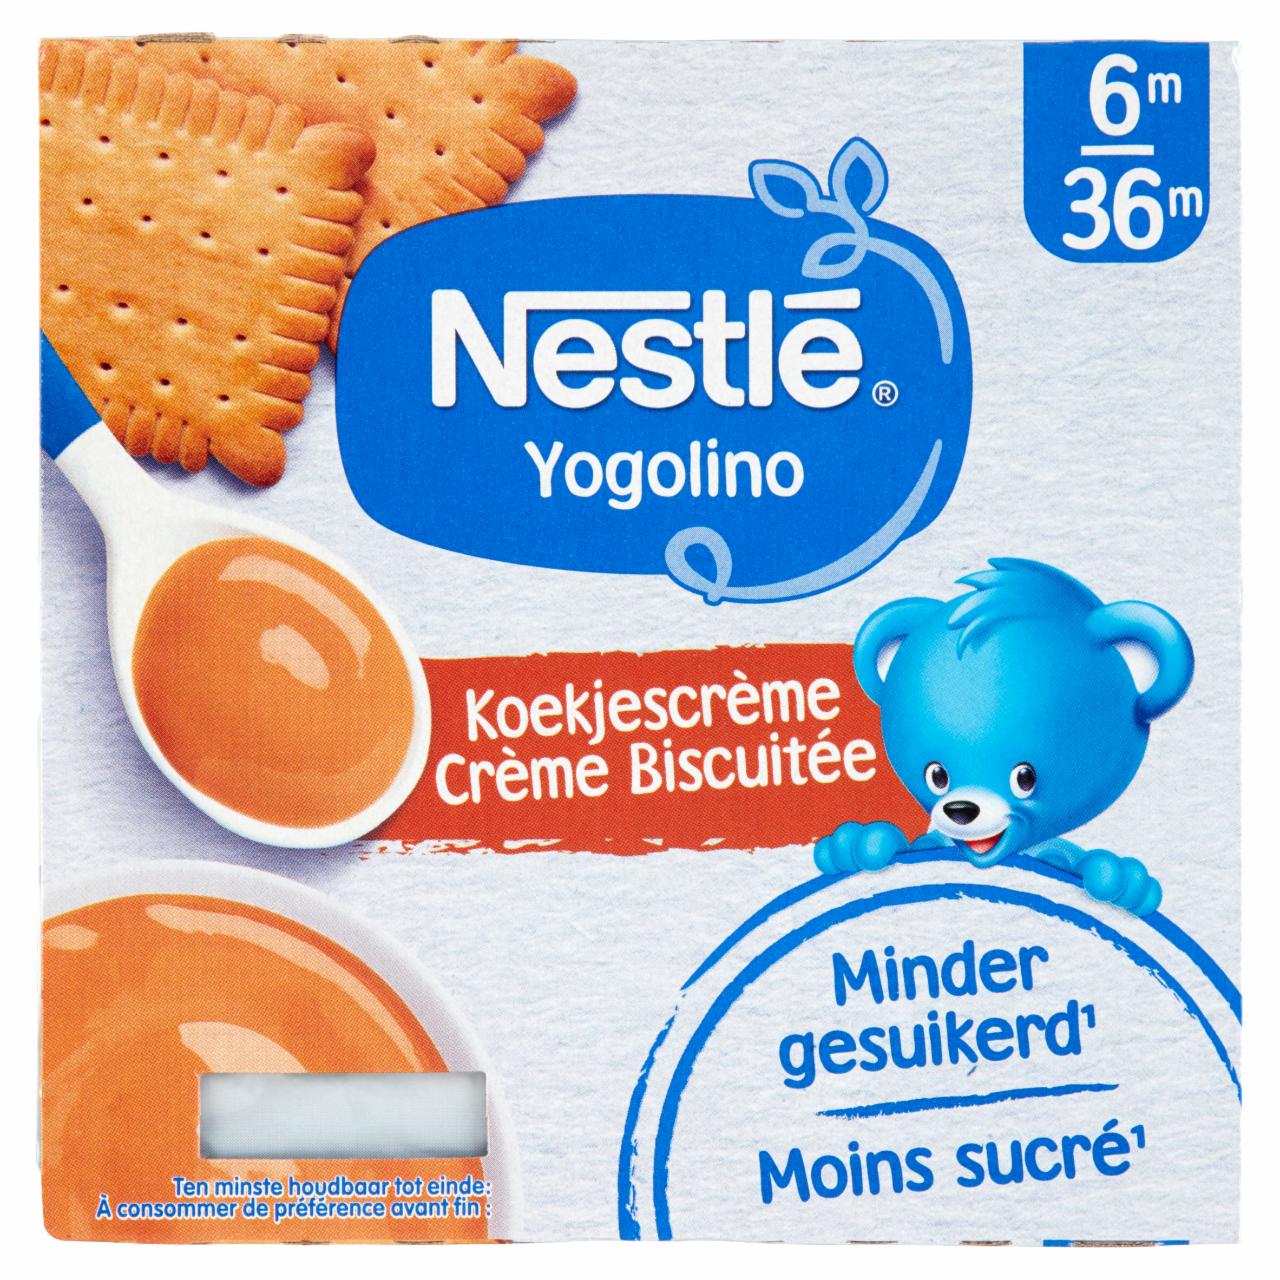 Képek - Nestlé Yogolino kekszes babapuding 6 hónapos kortól 36 hónapos korig 4 x 100 g (400 g)